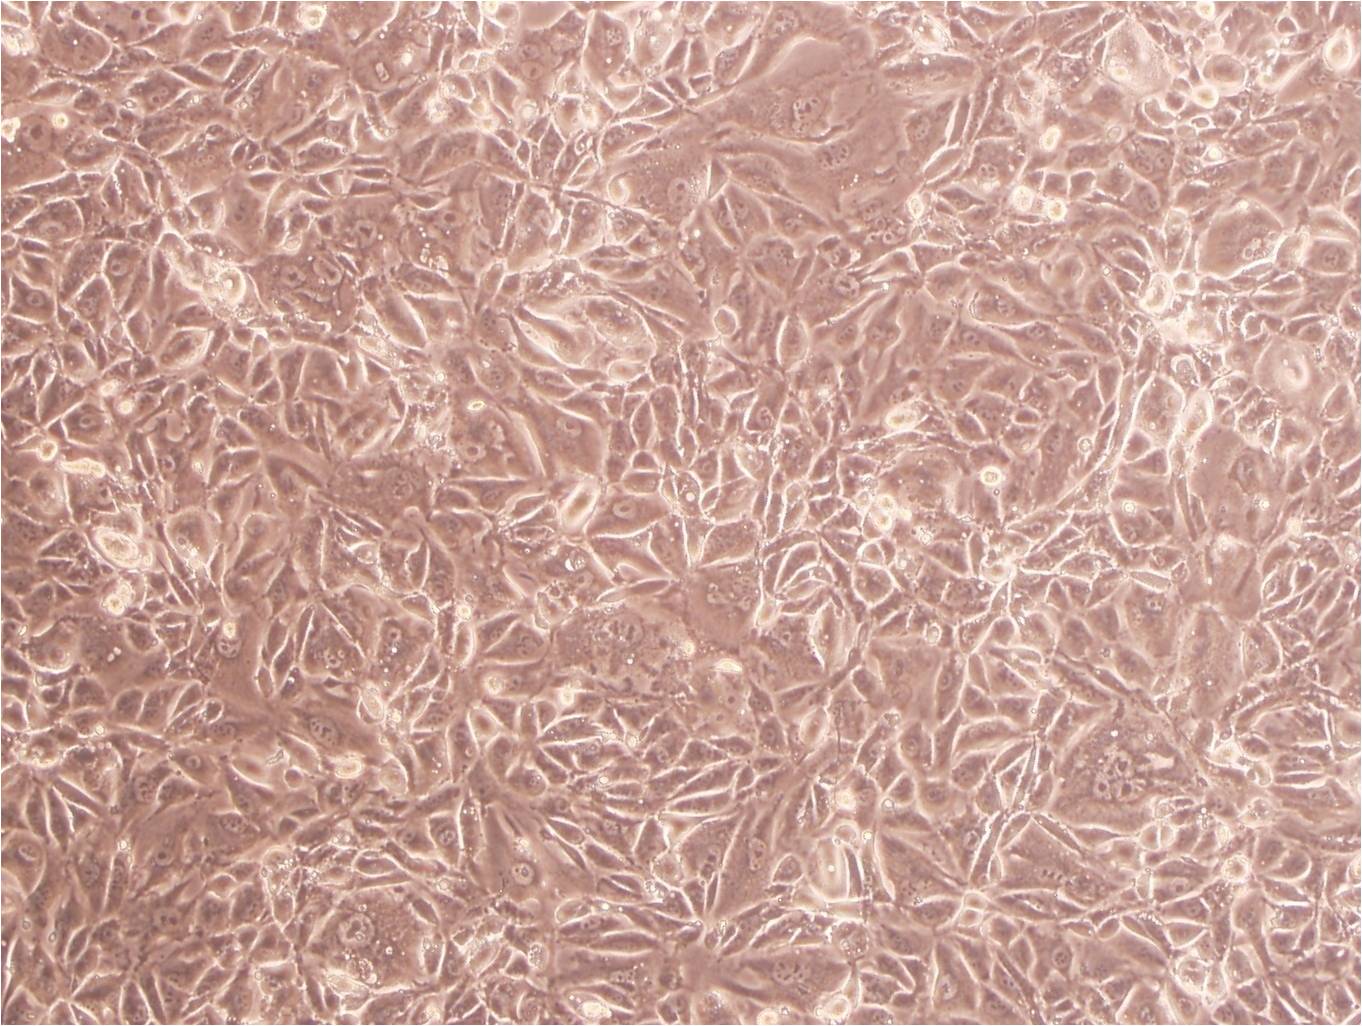 WTRL1 Cell|大鼠肺细胞